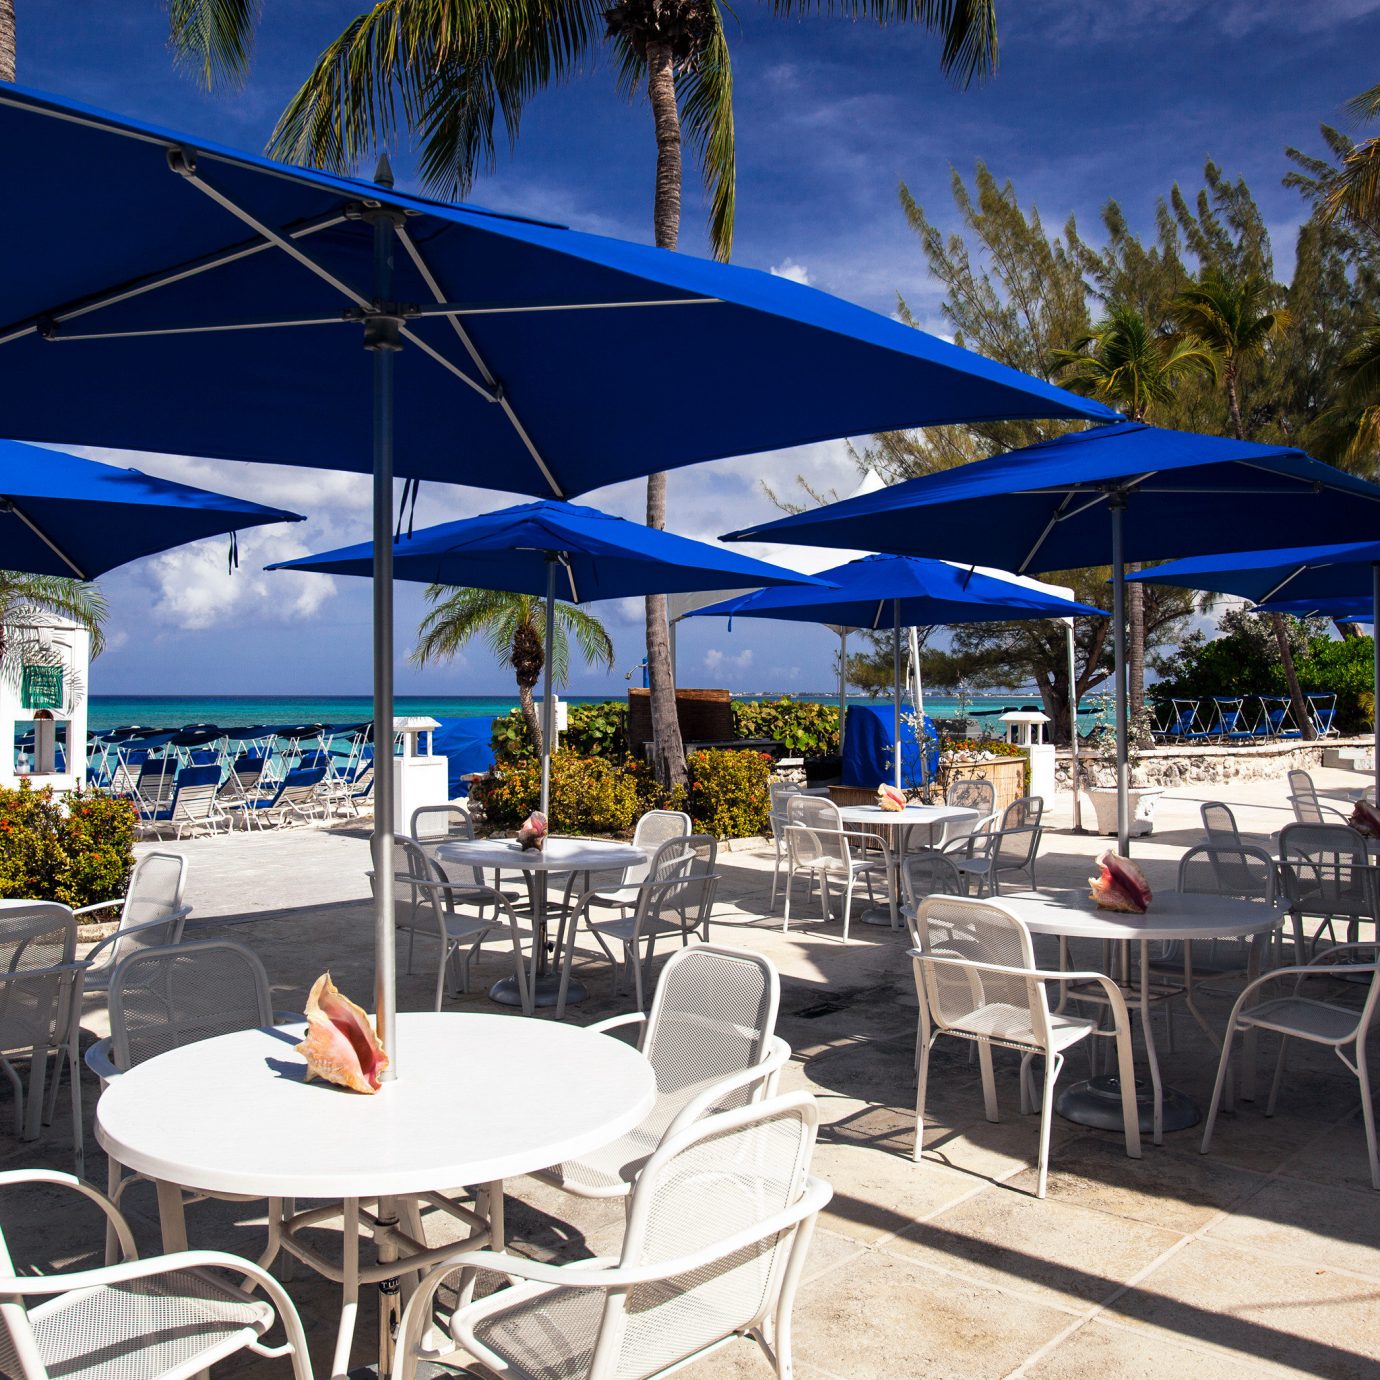 Beach Deck Dining Drink Eat Modern Outdoors tree umbrella chair restaurant Resort vehicle caribbean lawn marina blue set shade day